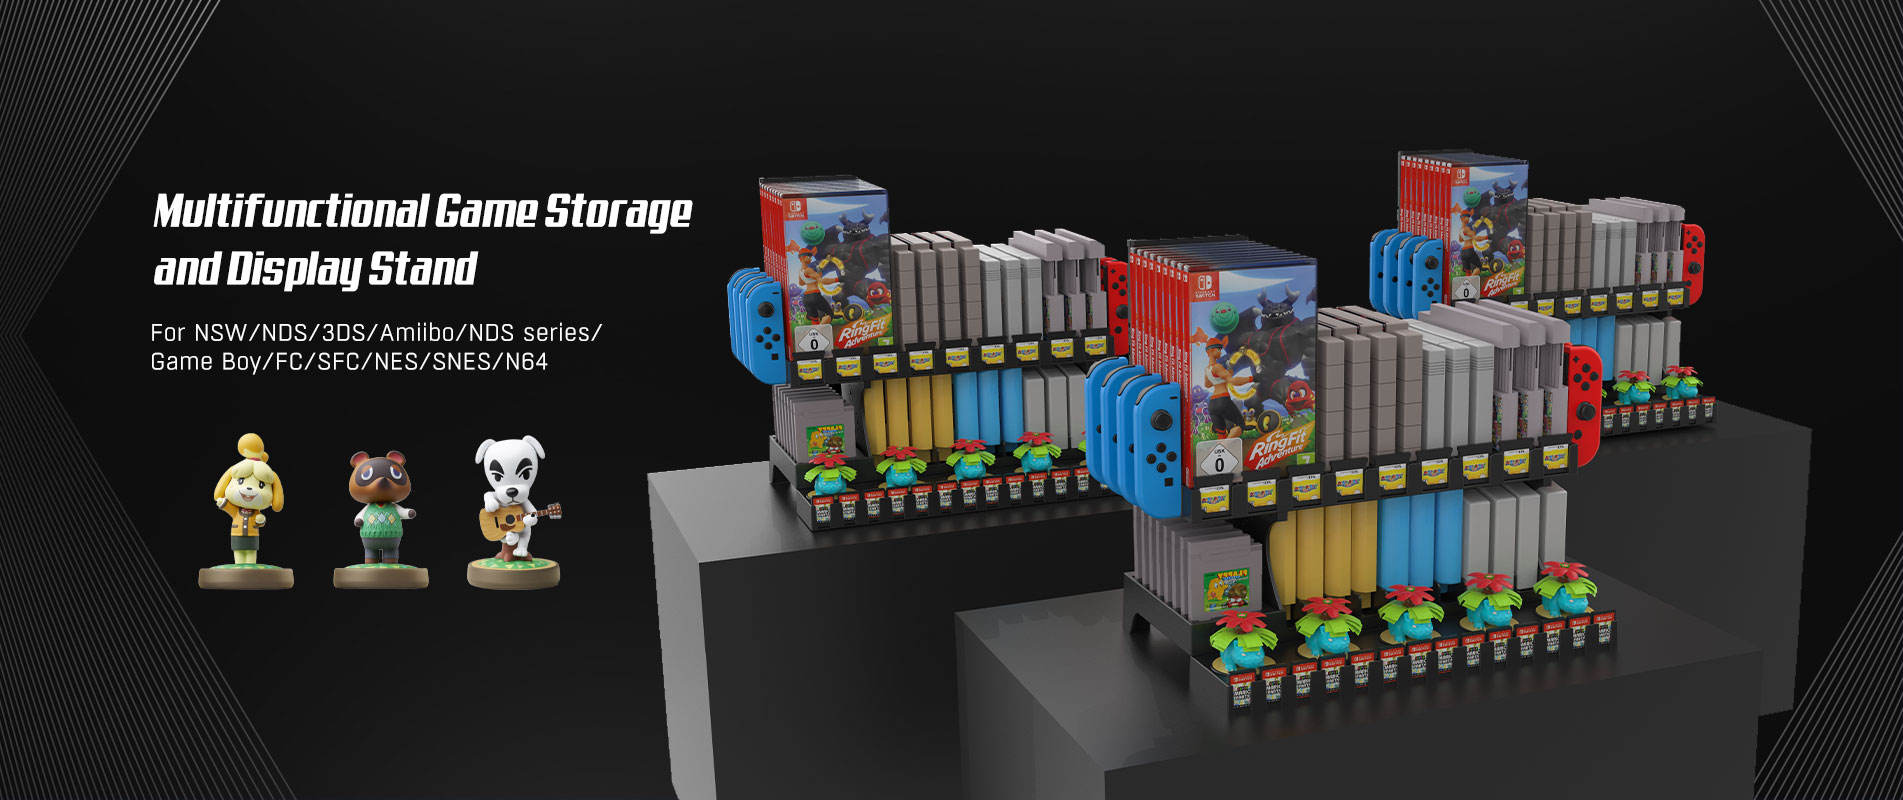 nintendo classic games storage stand